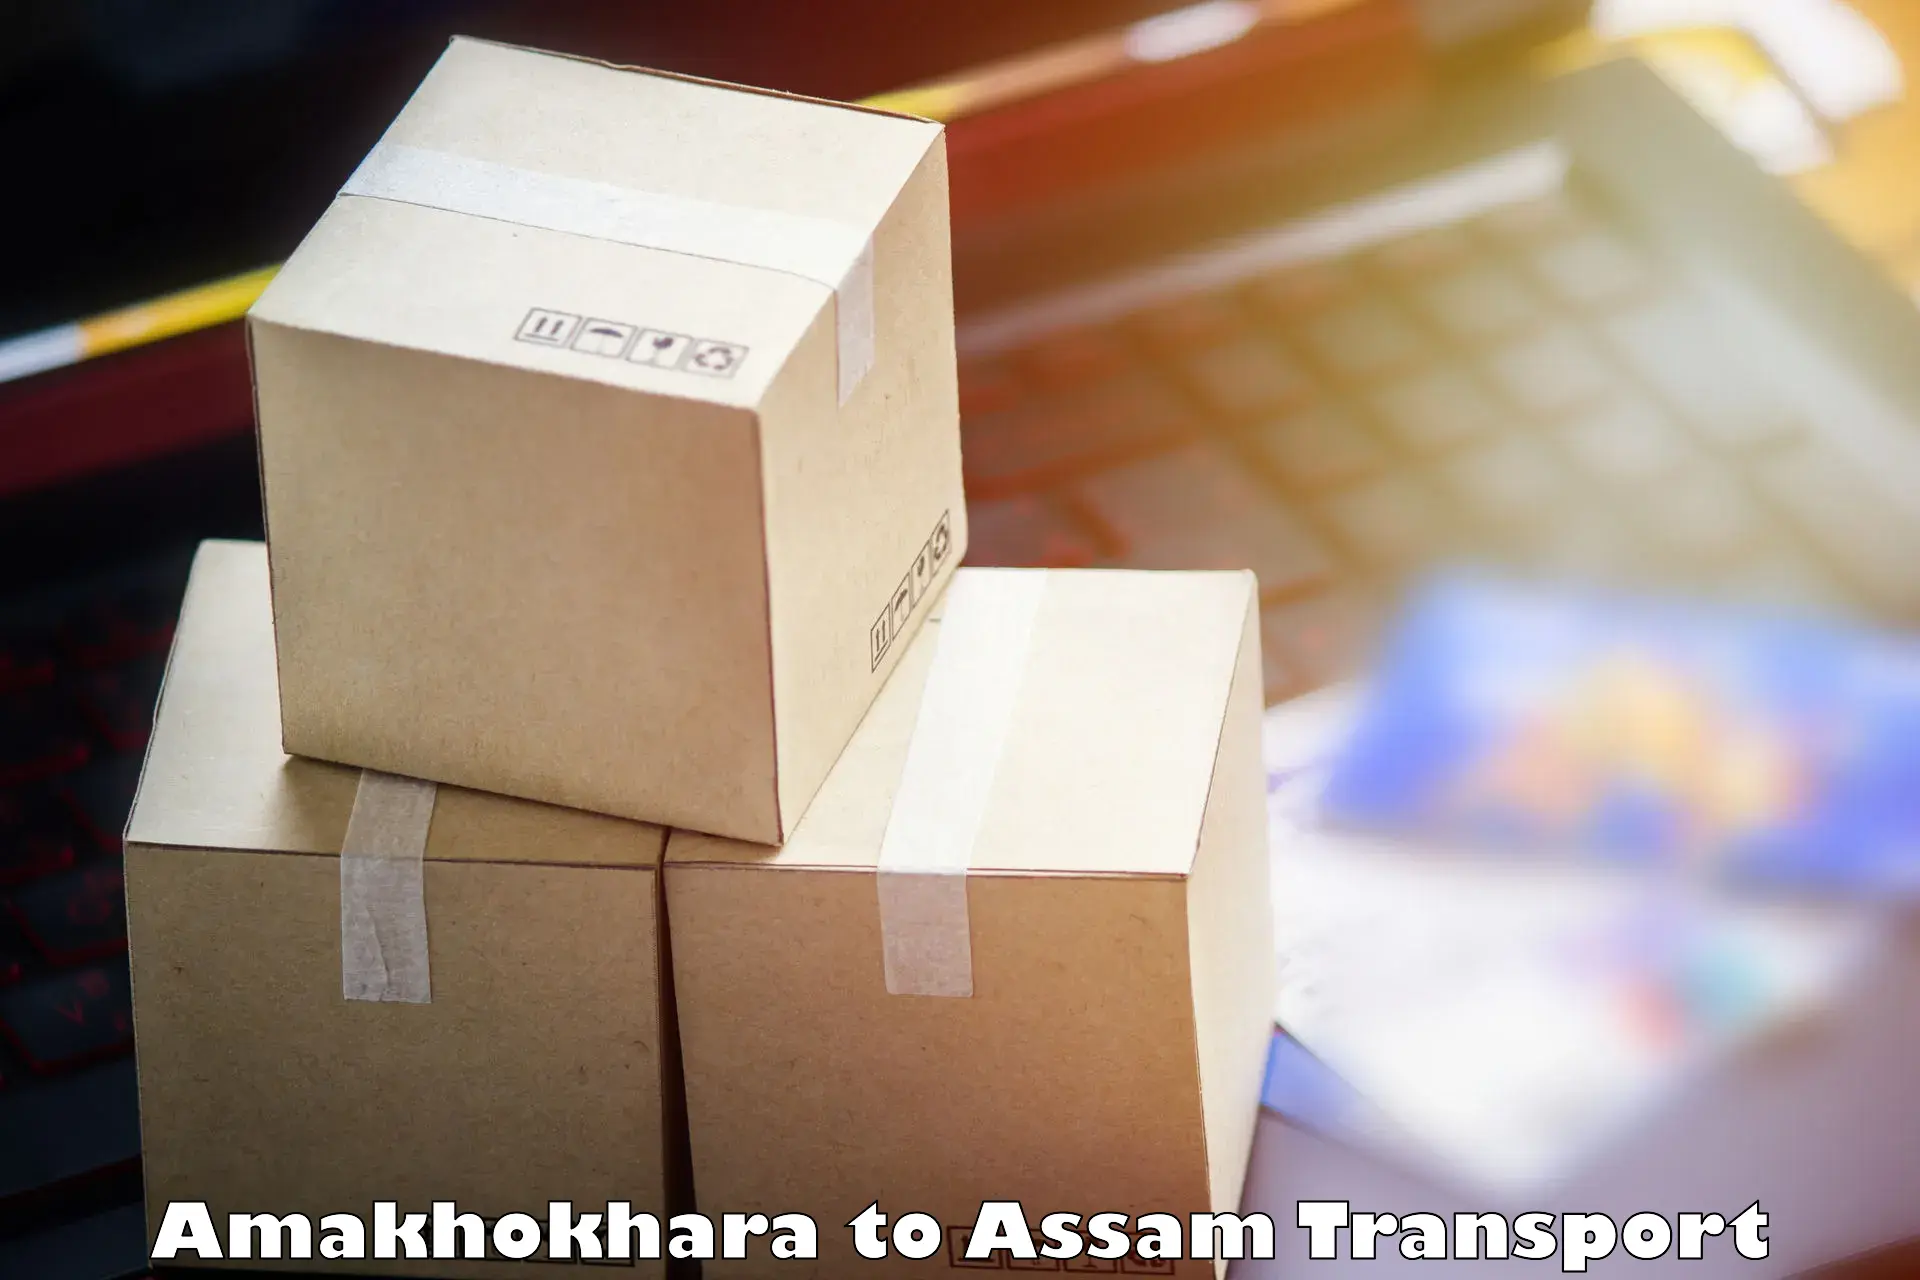 Bike transport service Amakhokhara to Assam